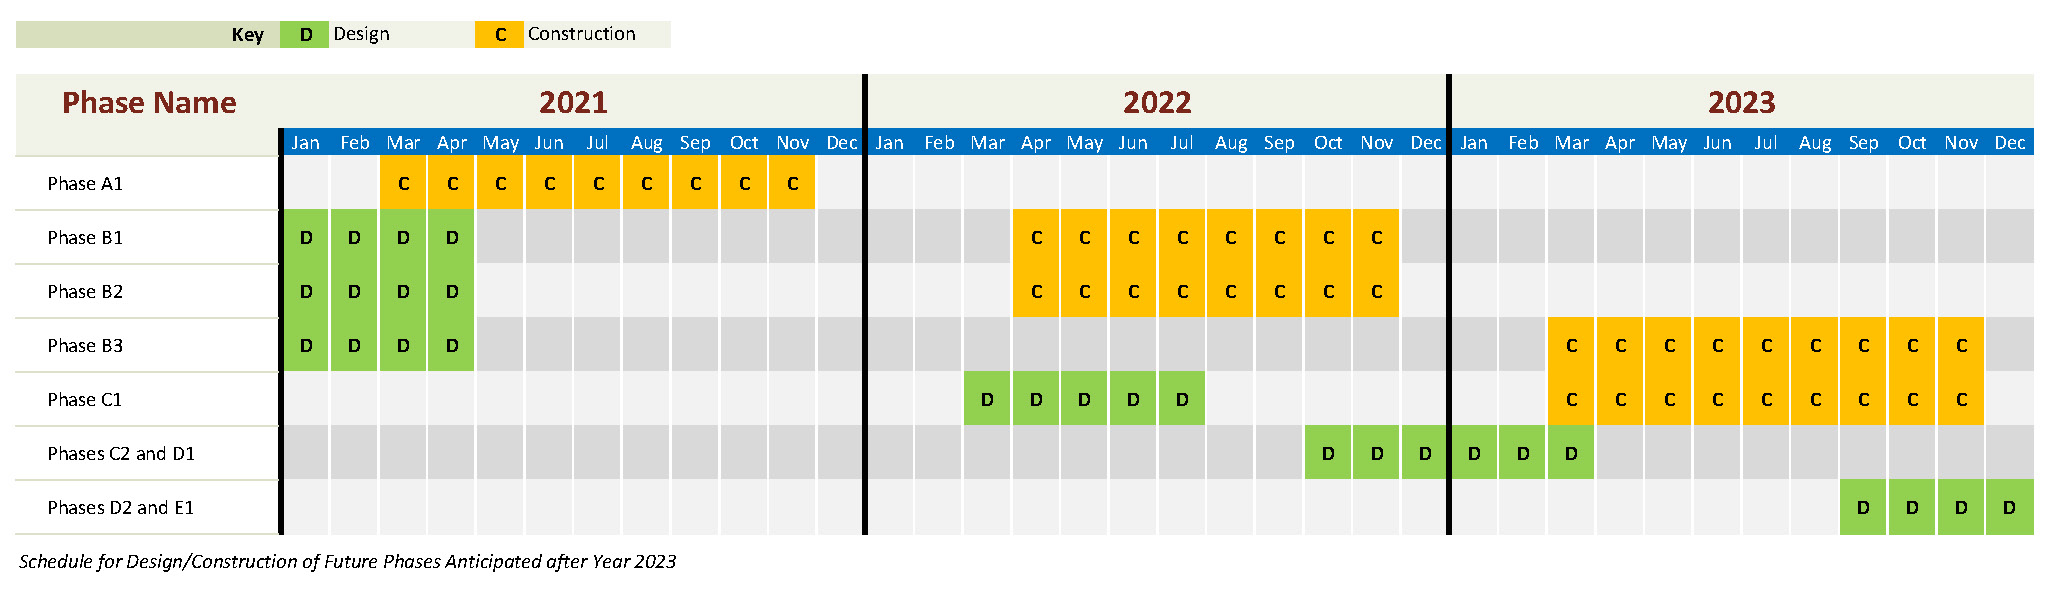 Signal Projects Schedule 2022 Update.jpg